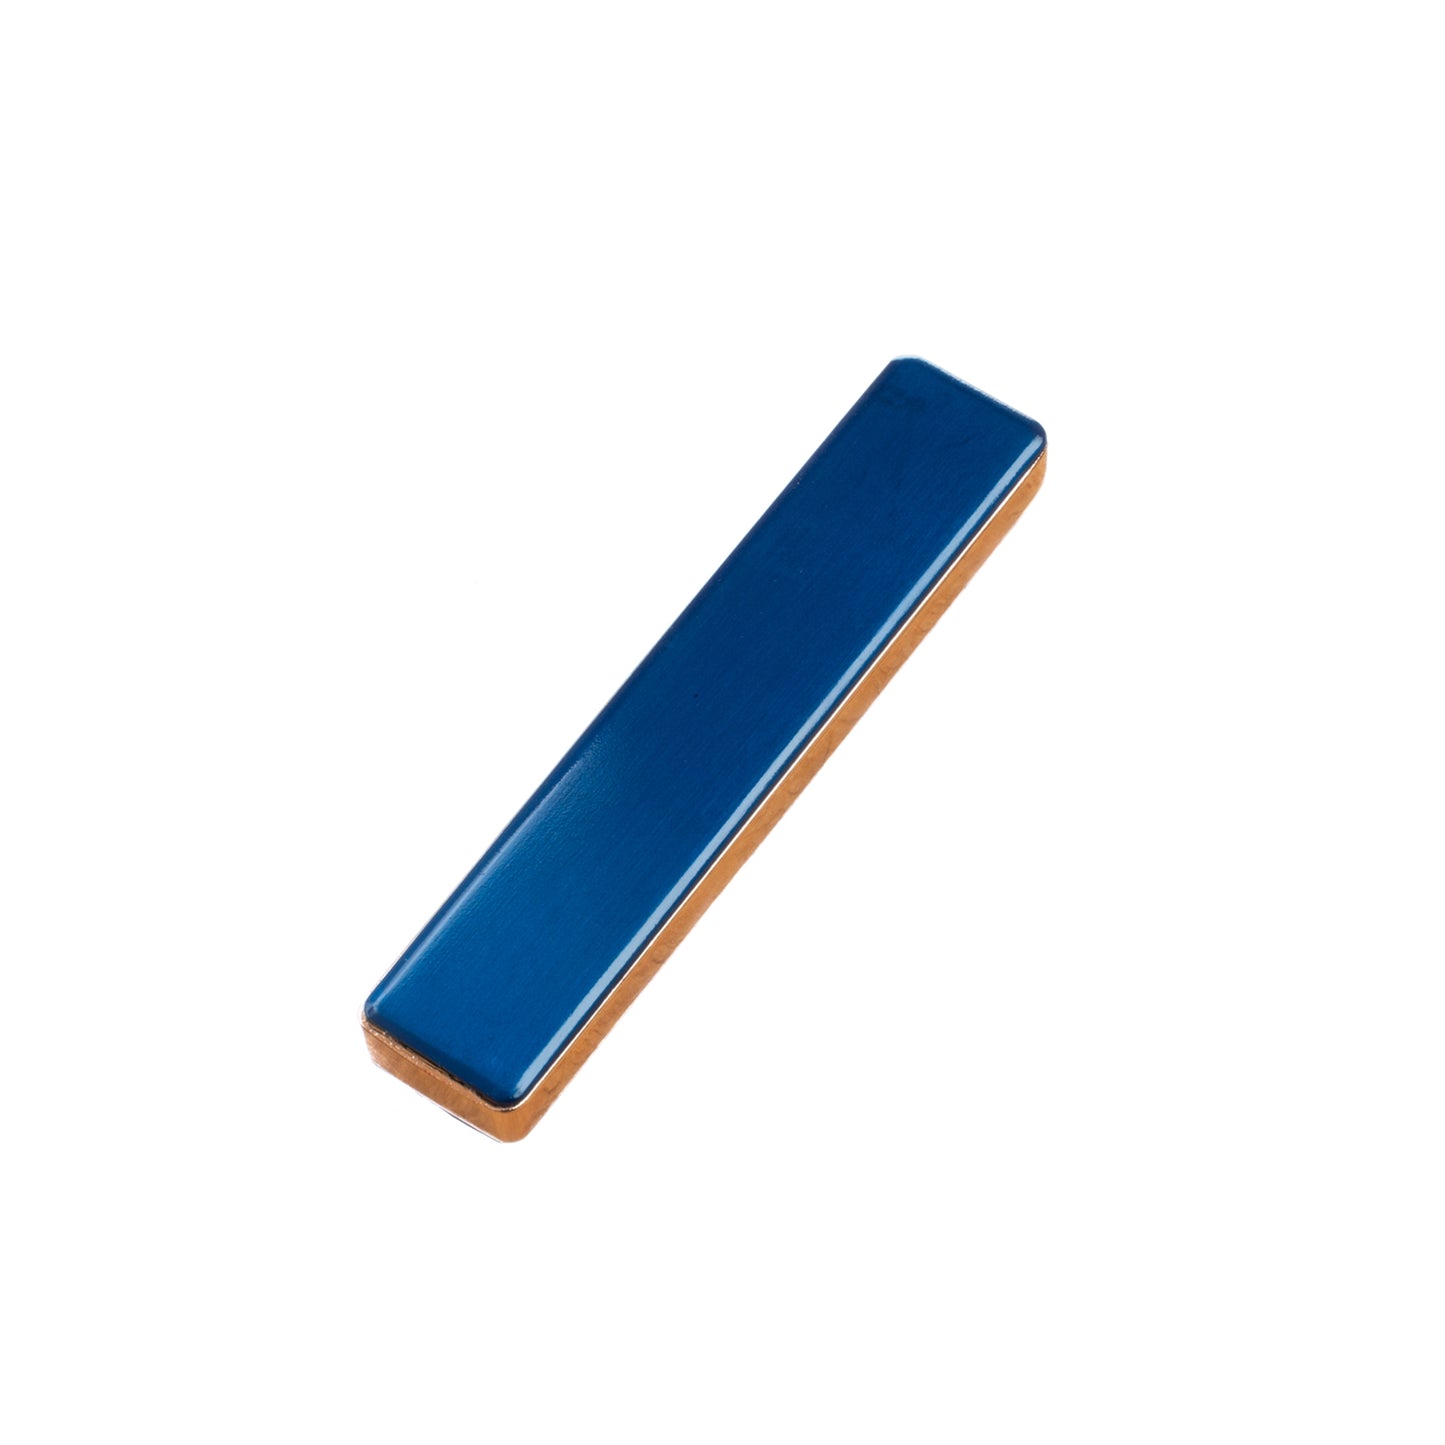 Flameless Rectangular Metal Trim Lighter Blue